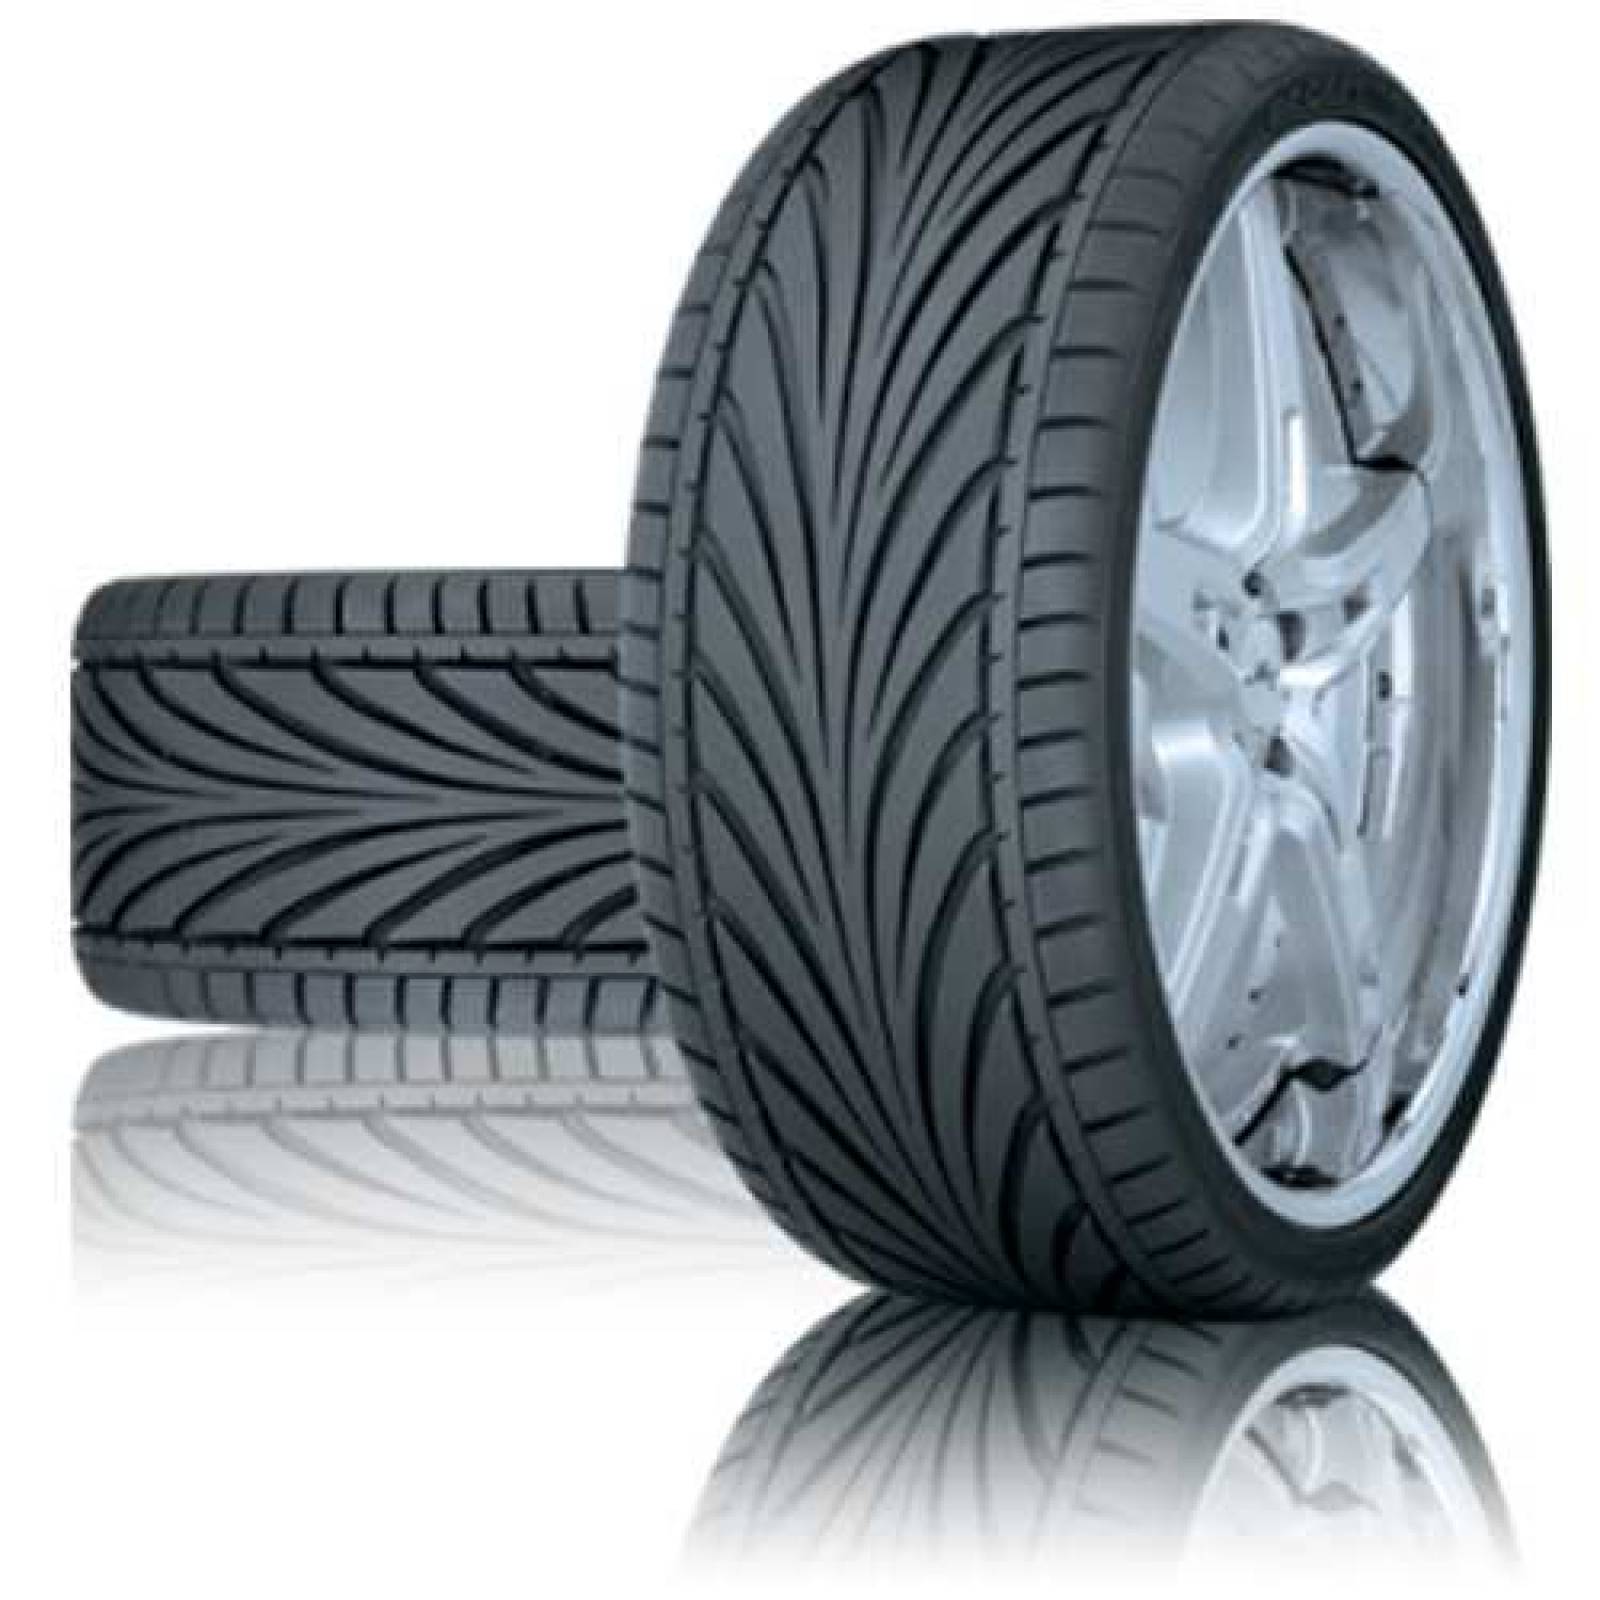 Llanta 245/55z R16 100w Proxes Tr1 Toyo Tires